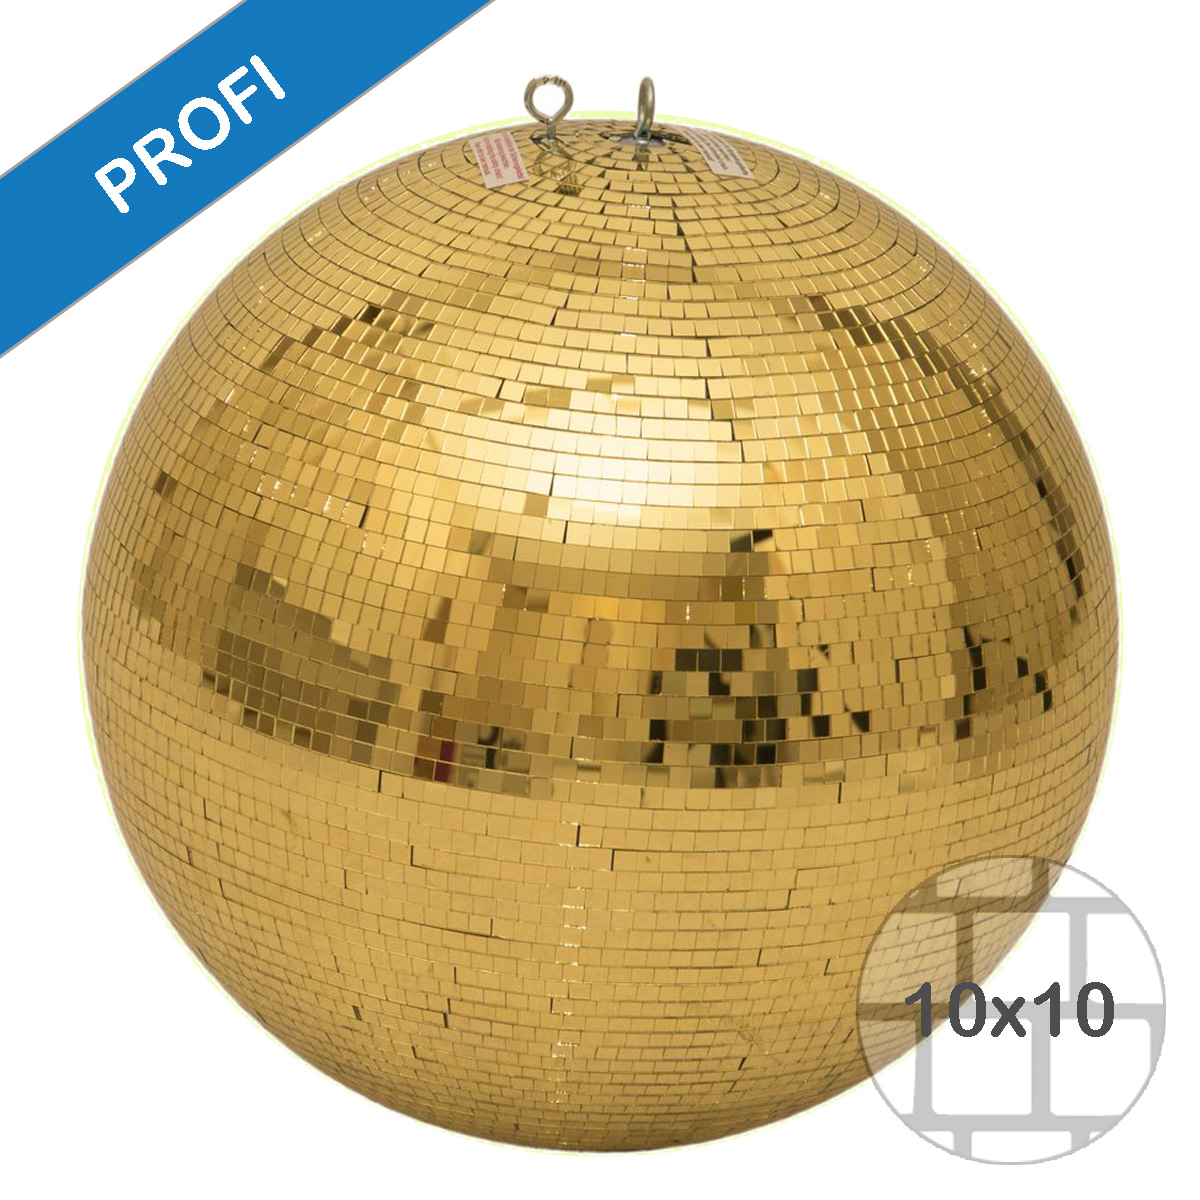 Spiegelkugel 100cm gold - Diskokugel (Discokugel) Party Lichteffekt - Echtglas - mirrorball safety gold color